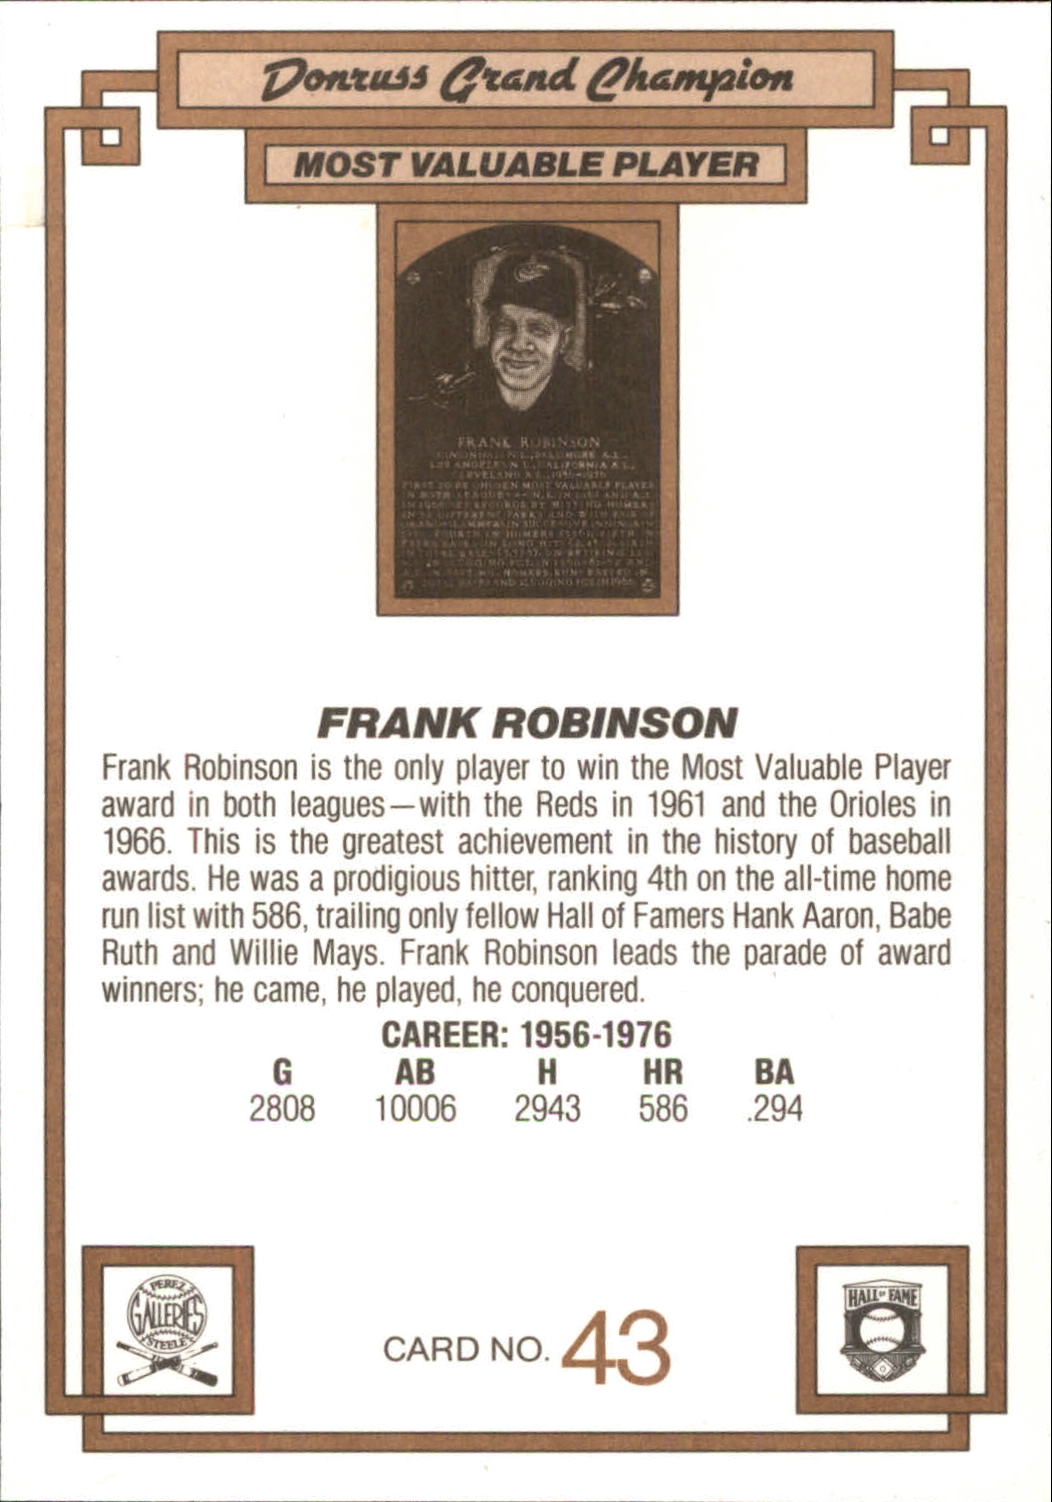 1984 Donruss Champions #43 Frank Robinson GC back image